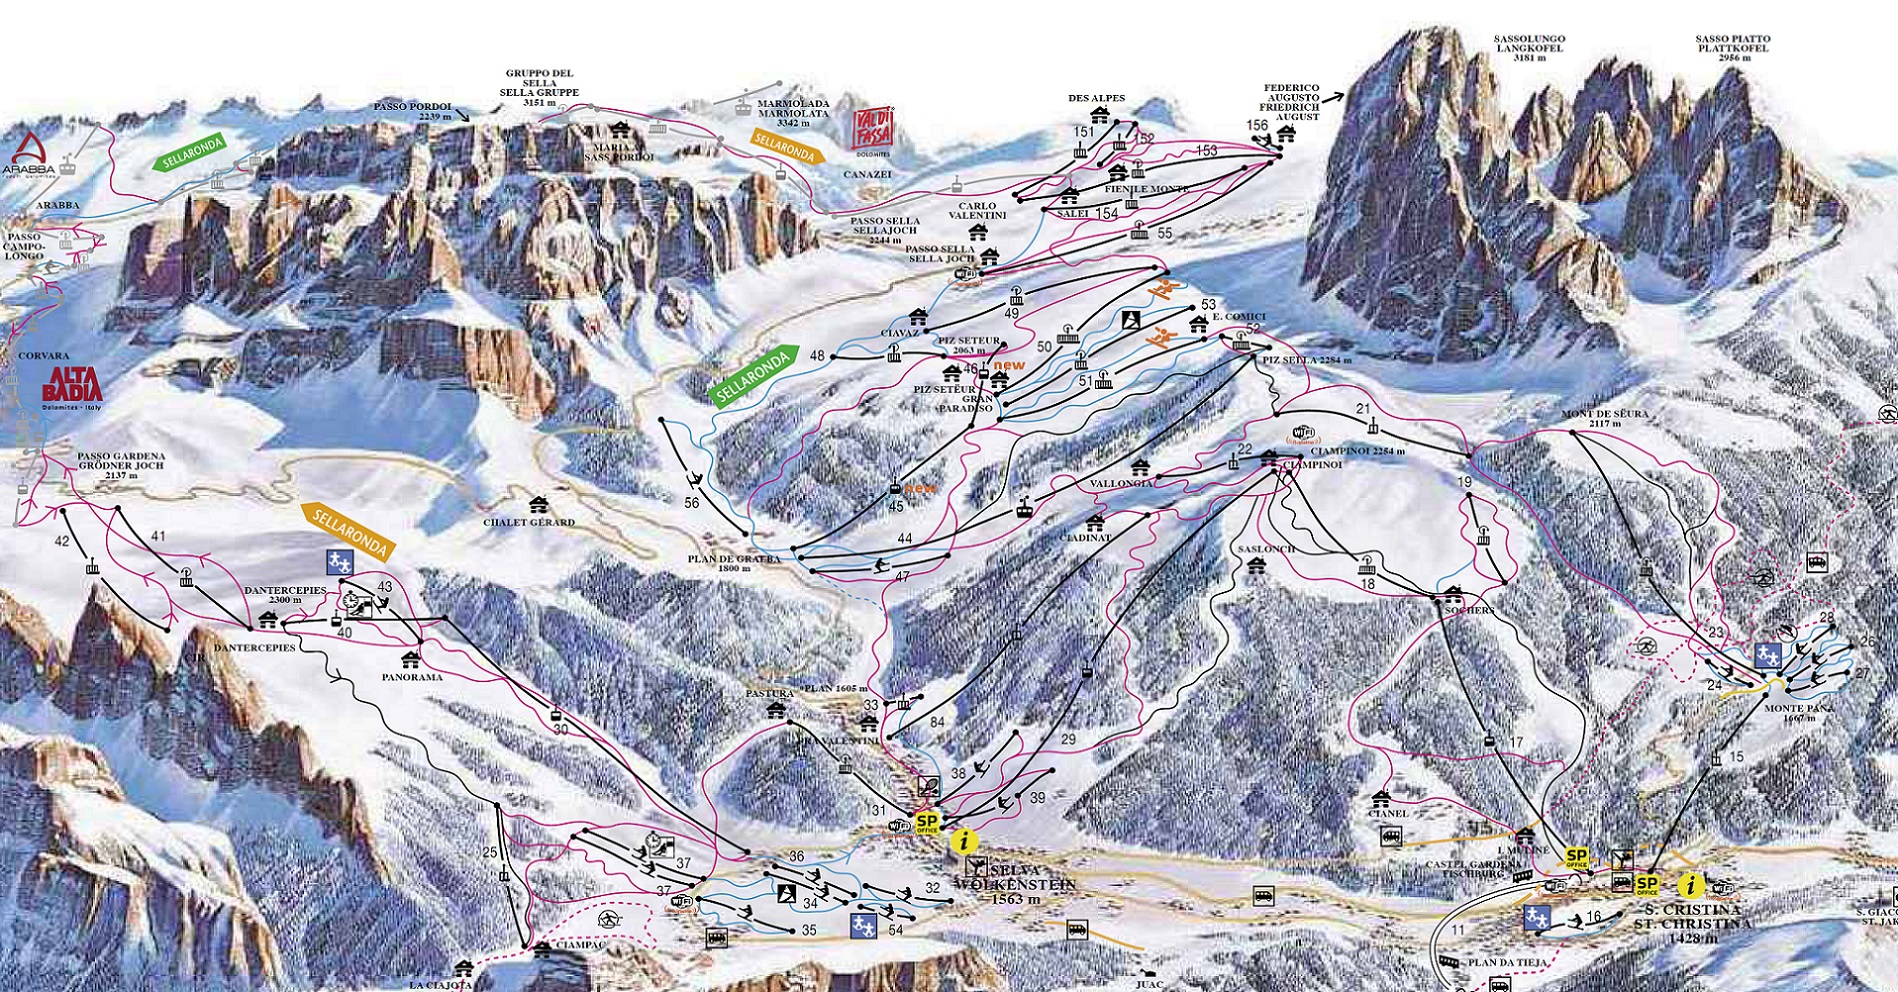 selva val gardena map Skiing Val Gardena Val Gardena Ski Lifts Terrain Trail Maps selva val gardena map